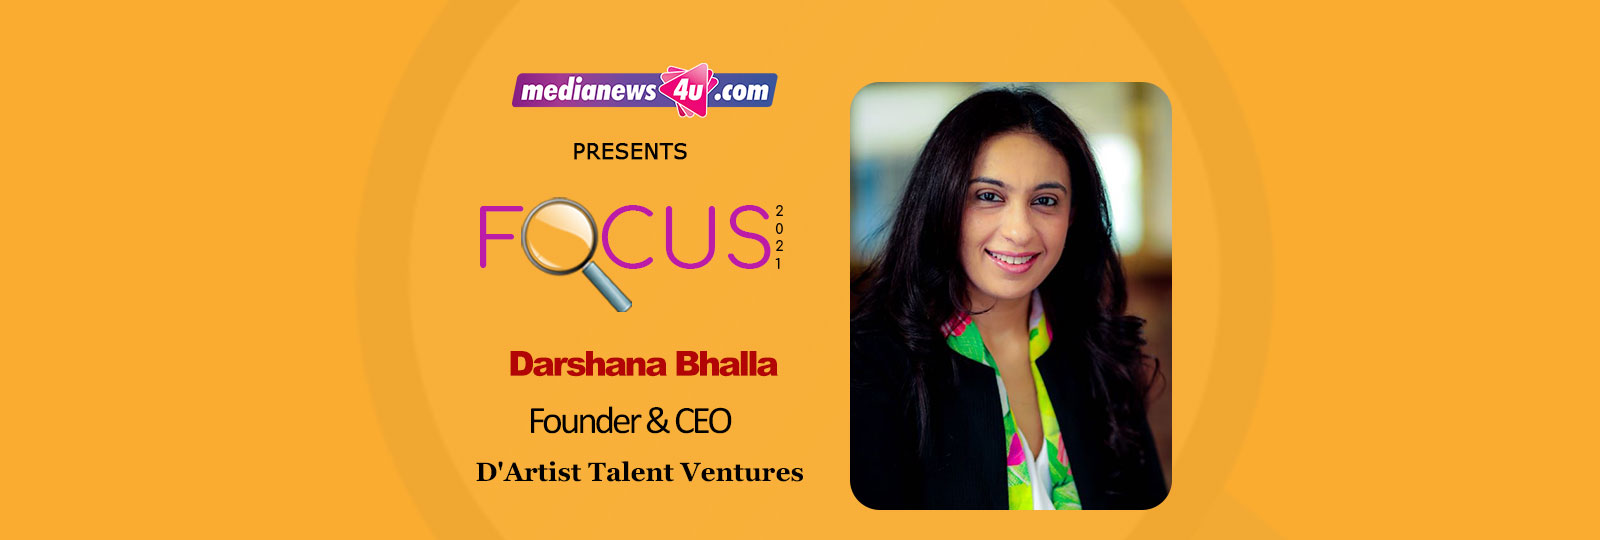 Darshana Bhalla - Founder & CEO, D'Artist Talent Ventures